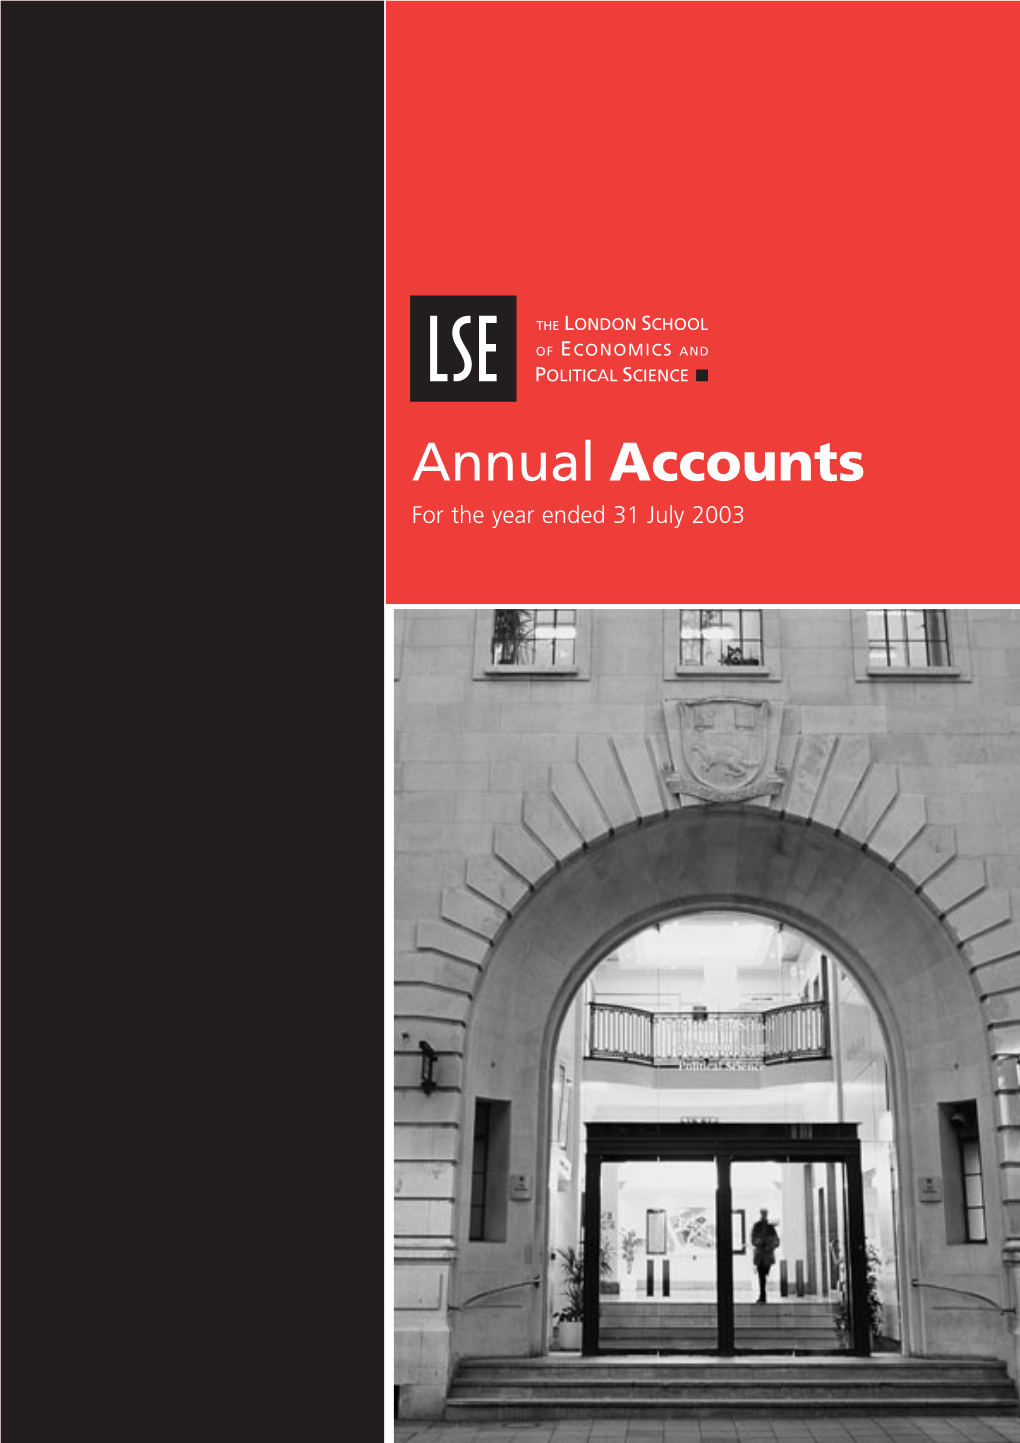 2002-03 Annual Accounts